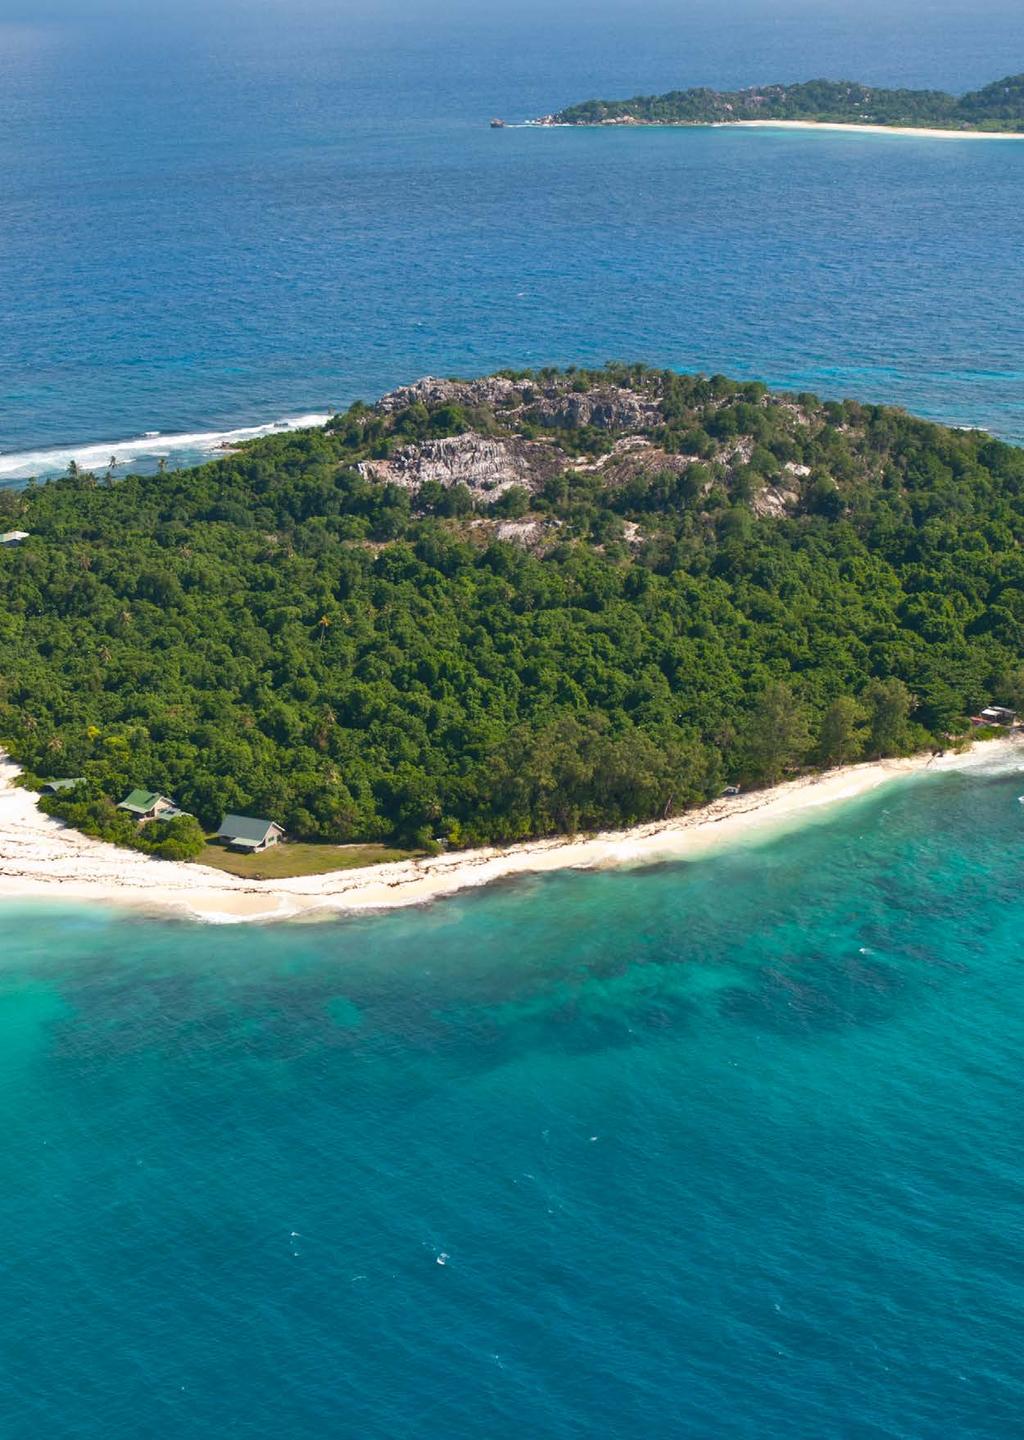 Ilha granítica que abrange cerca de 27 hectares, a ilha de Cousin está localizada a aproximadamente 2 km da ilha de Praslin.